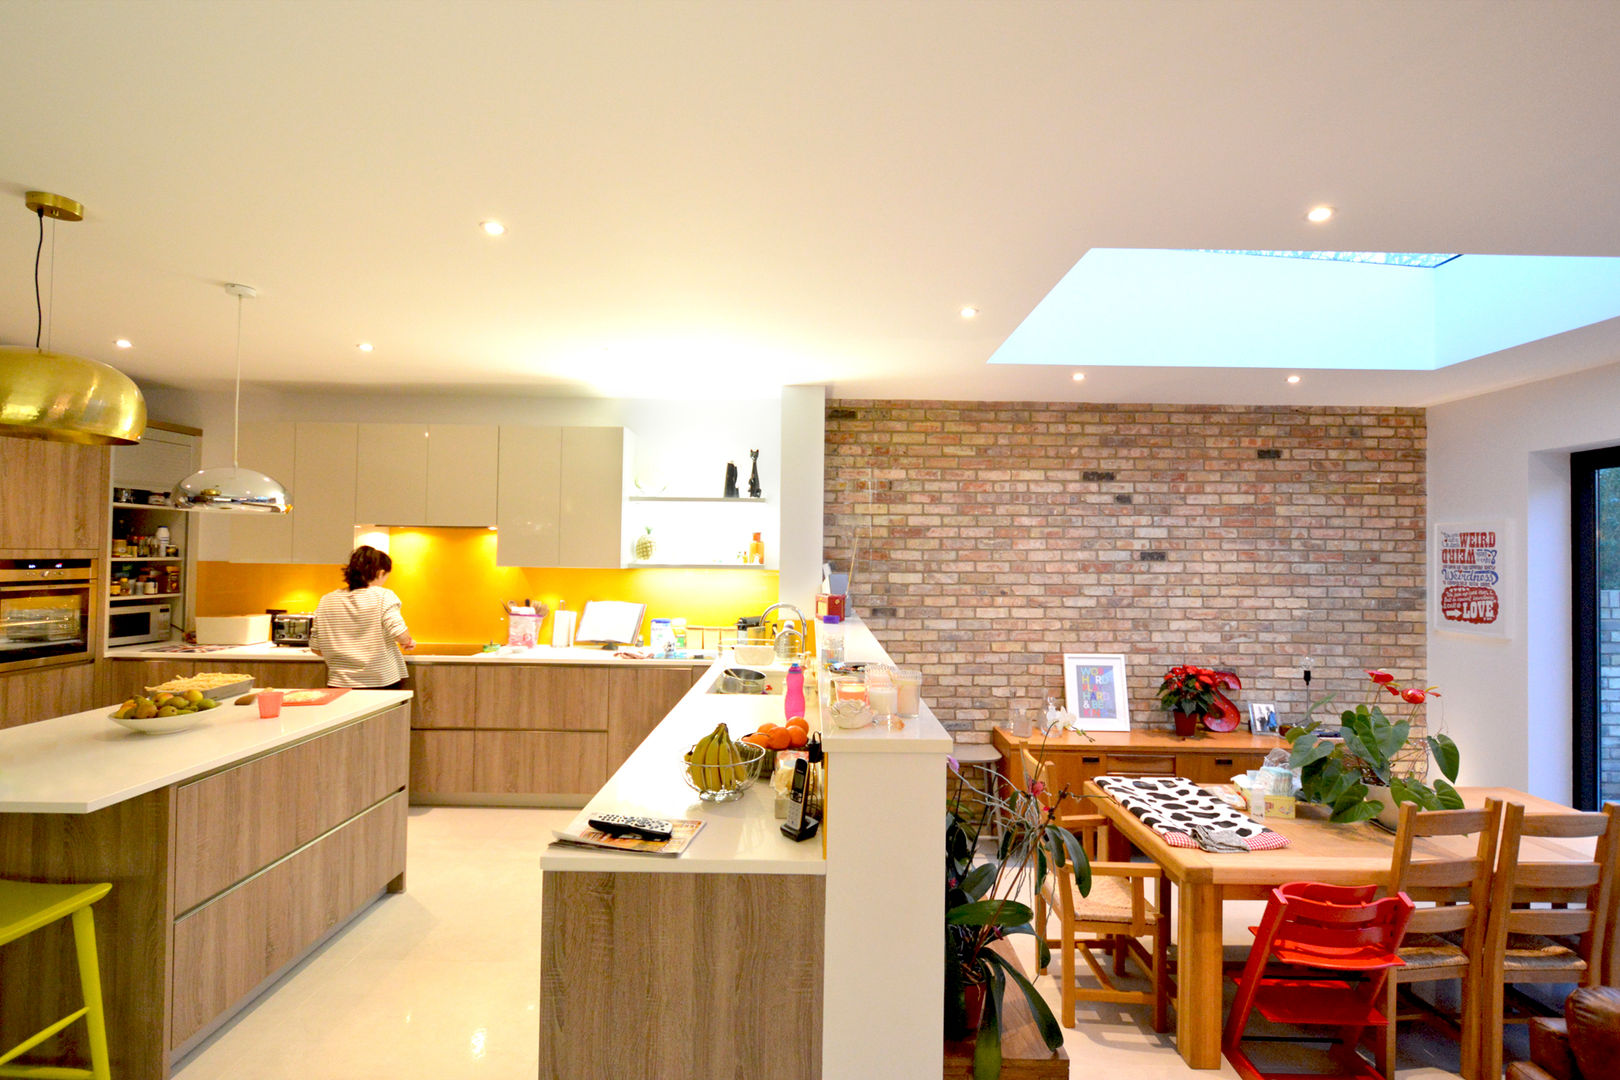 Grange Park, Enfield N21 | House extension GOAStudio London residential architecture limited Kitchen